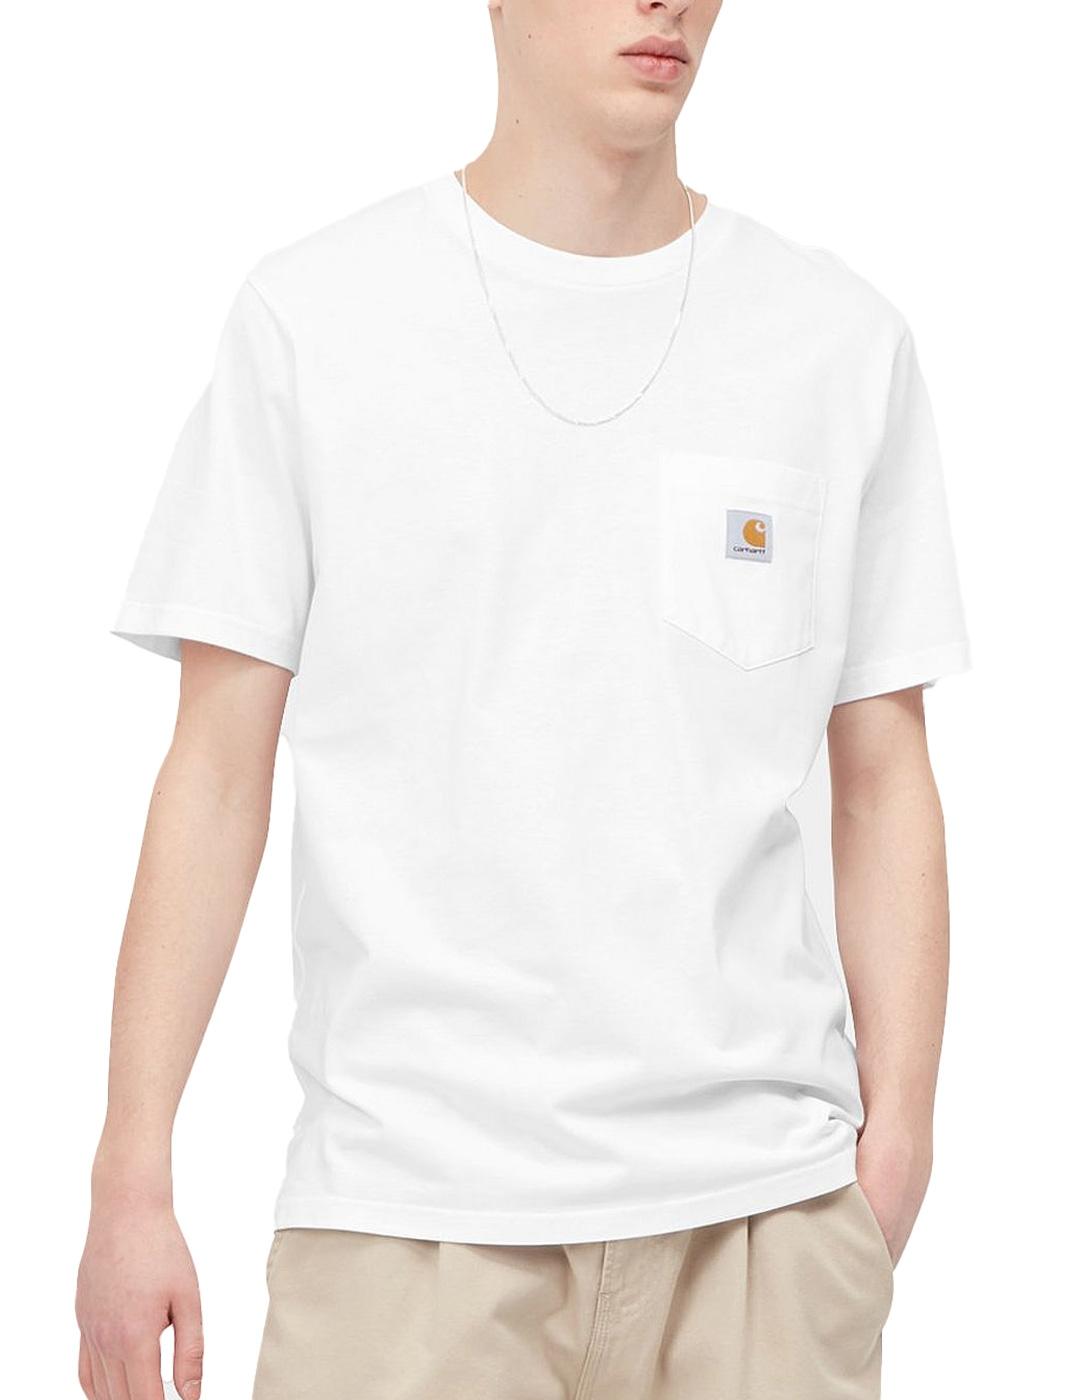 Camiseta Carhartt Pocket Blanco